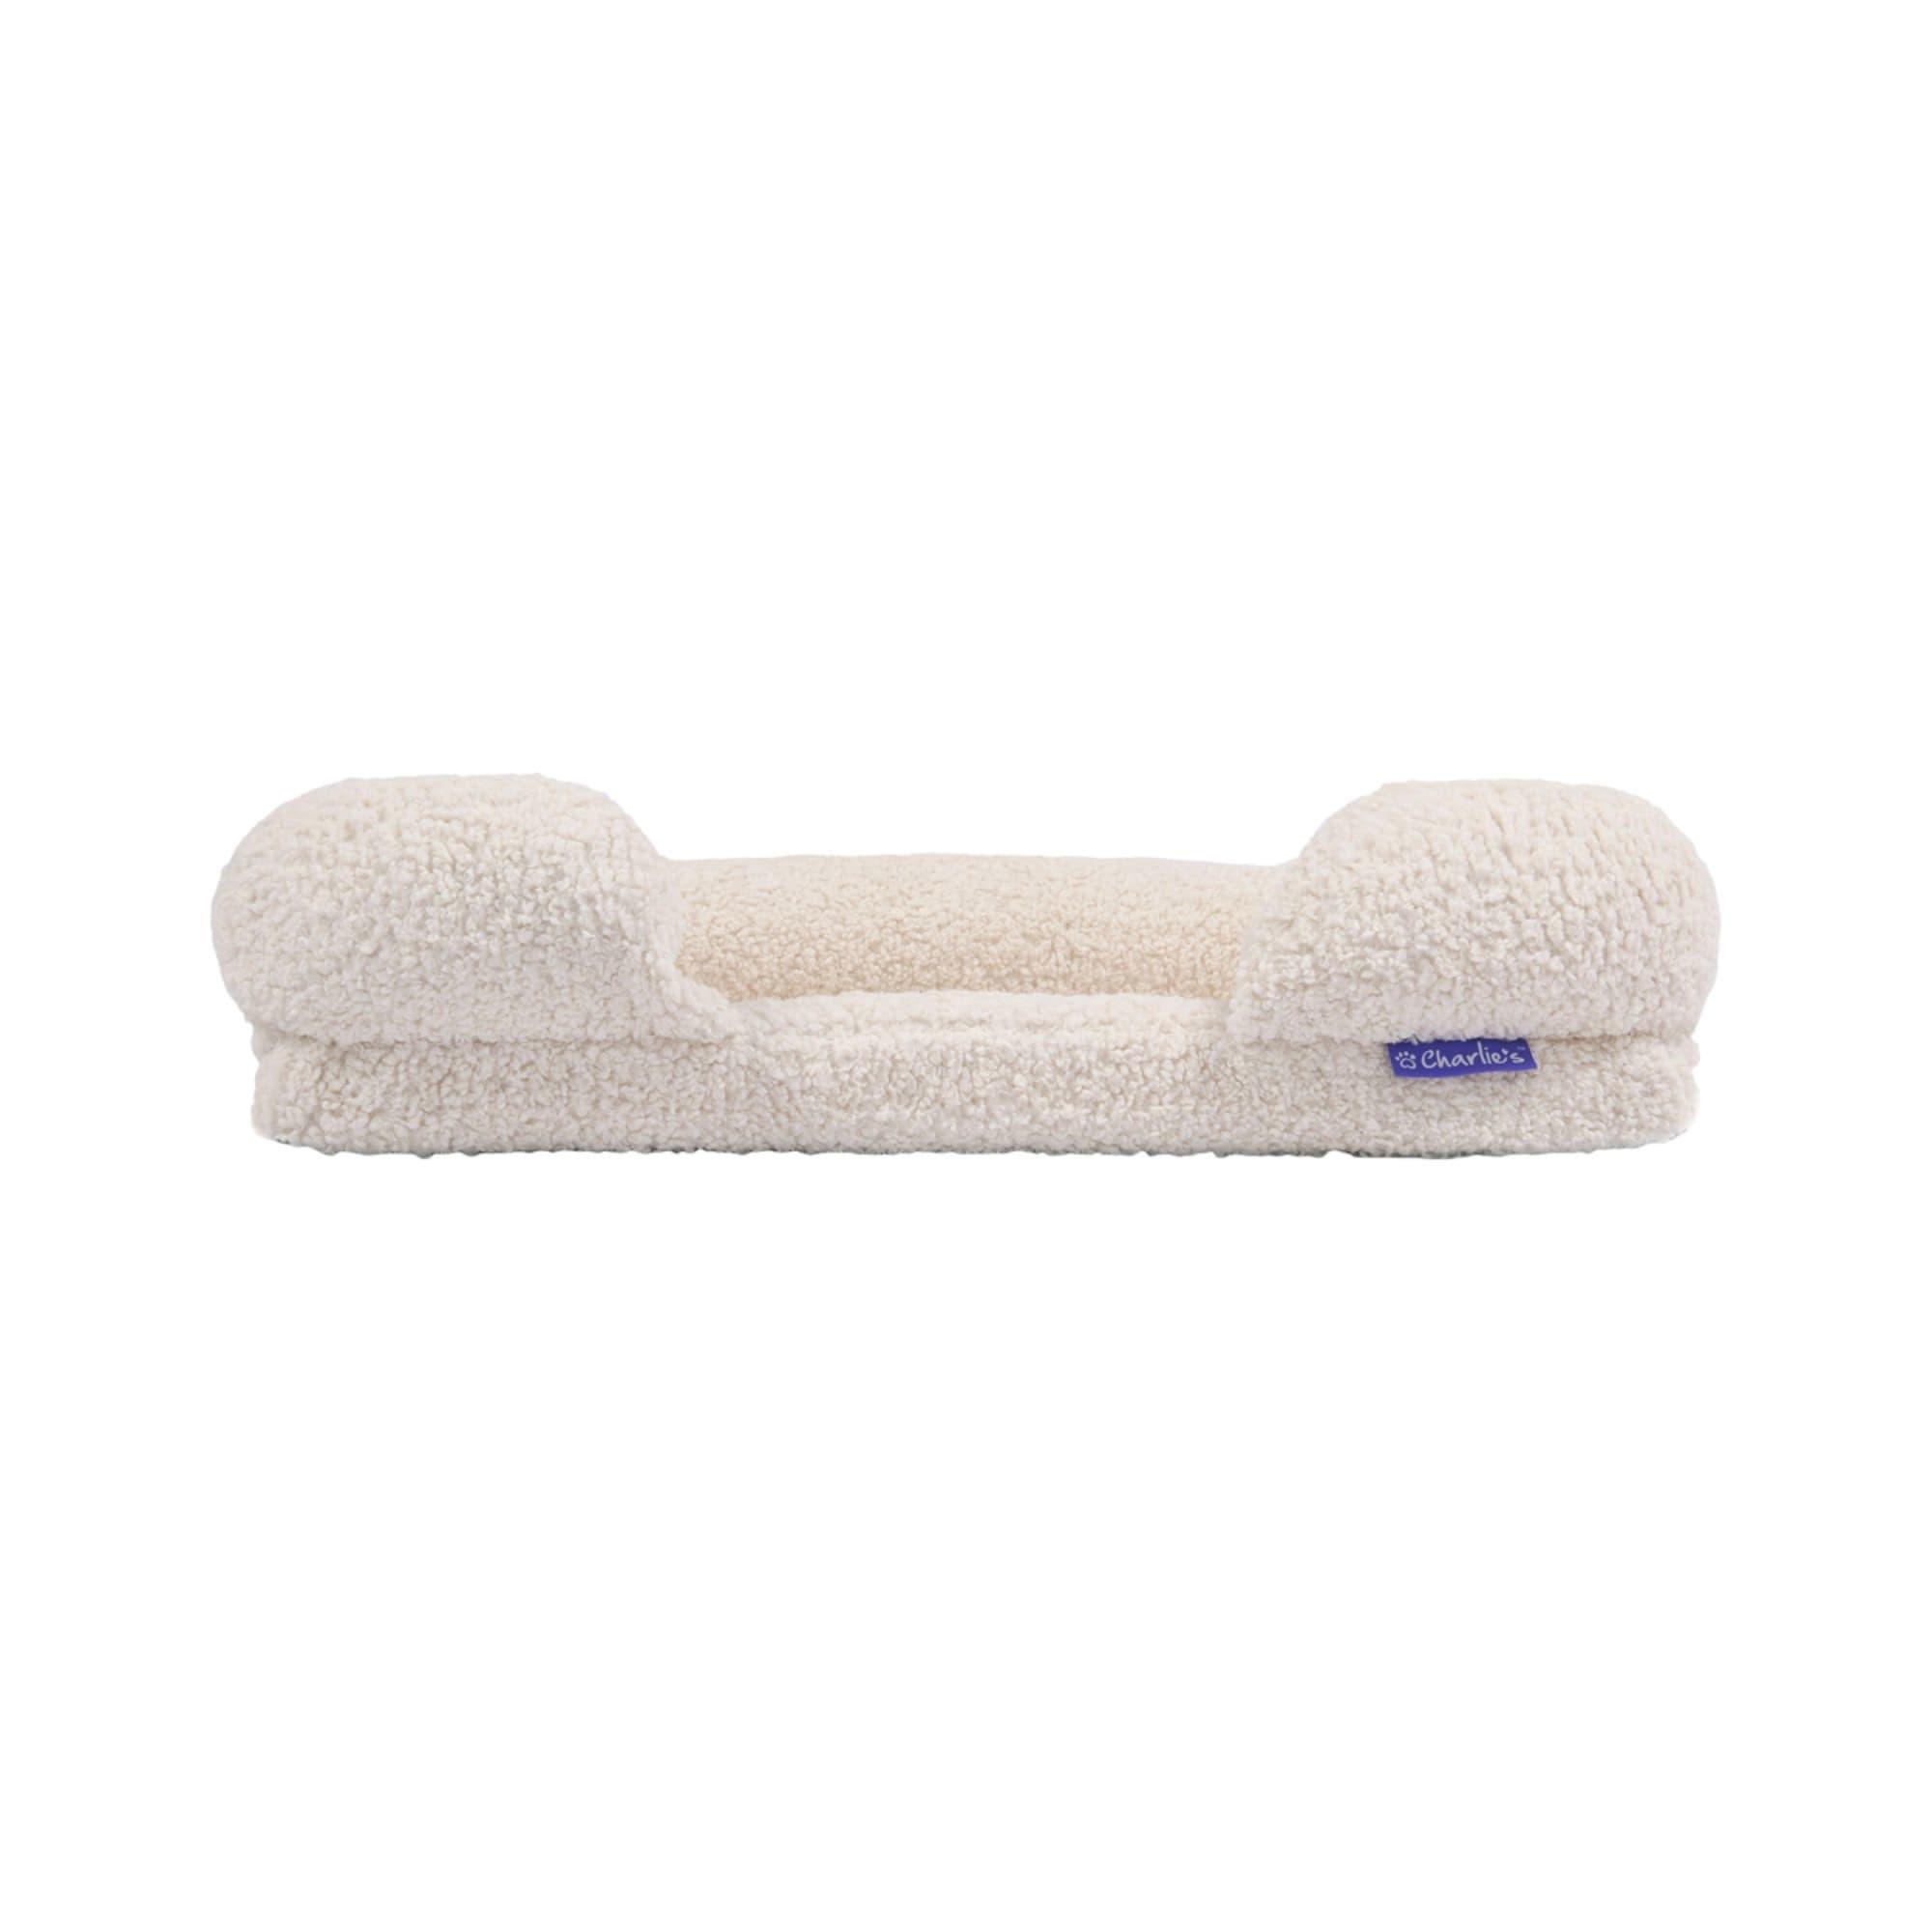 Charlie's Teddy Fleece Orthopedic Memory Foam Sofa Dog Bed Small Cream Image 5